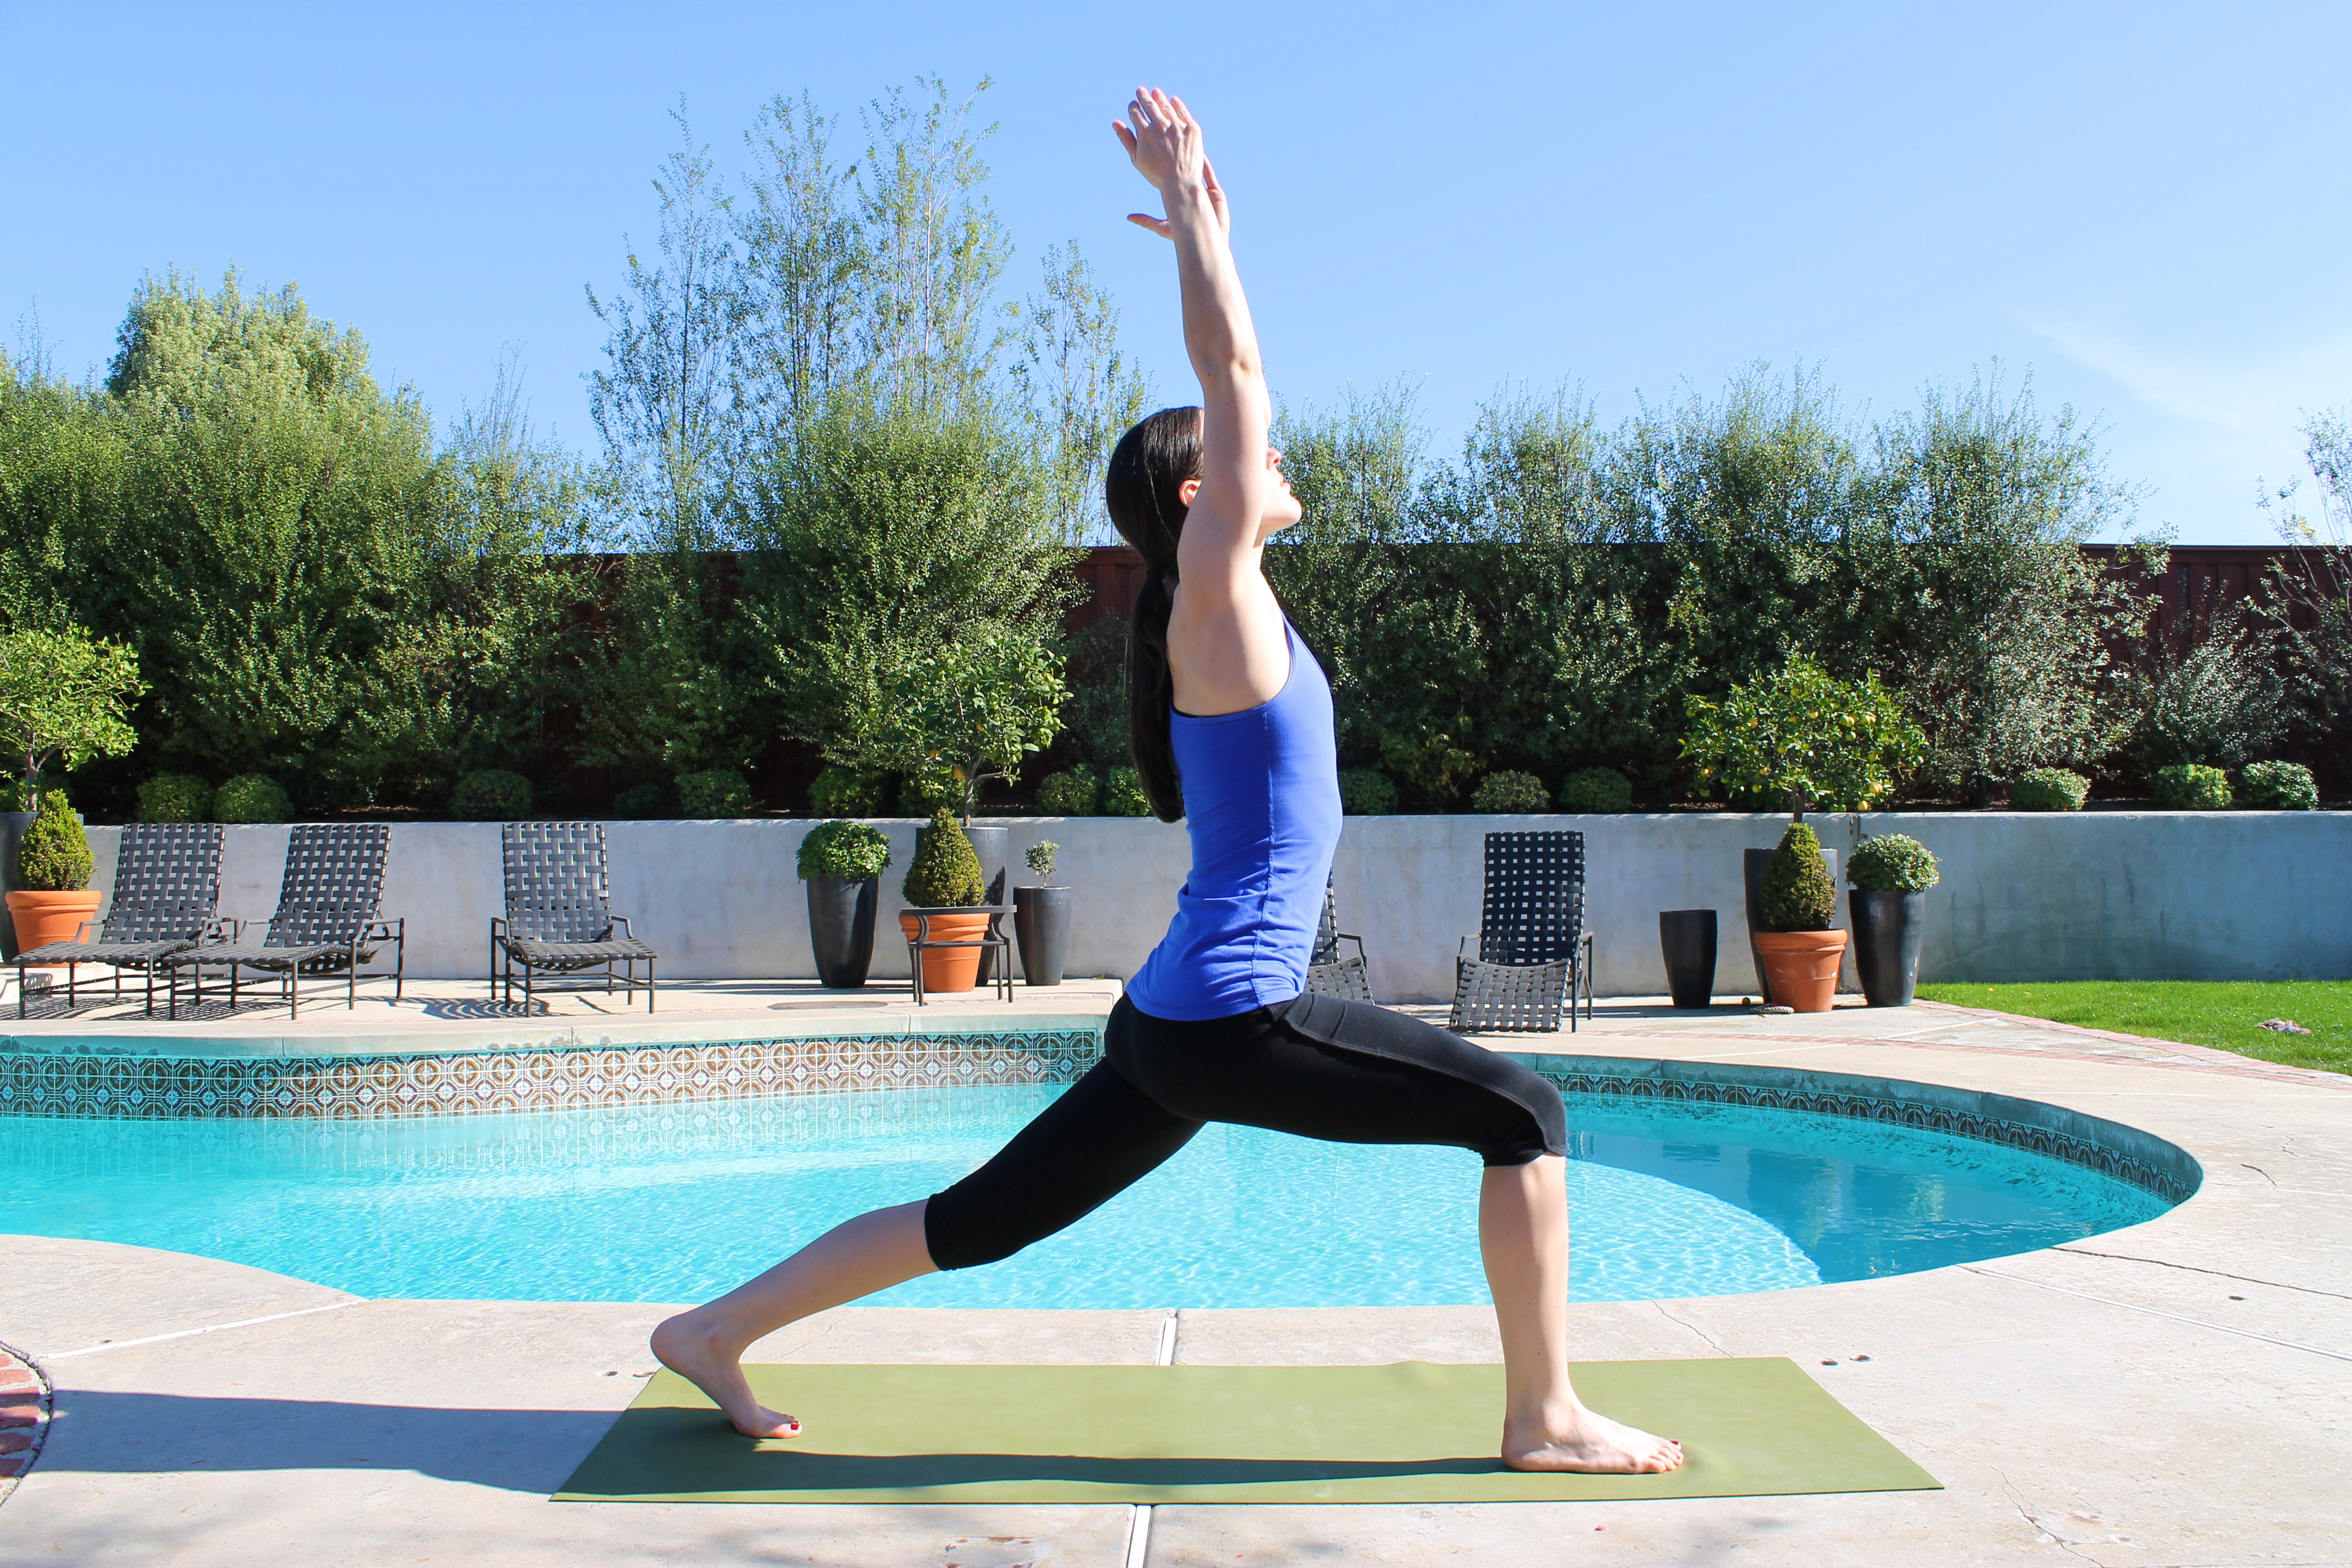 Yoga for Beginners - 9 Yoga Poses for Shoulder Strengthening | Body Flows  Article